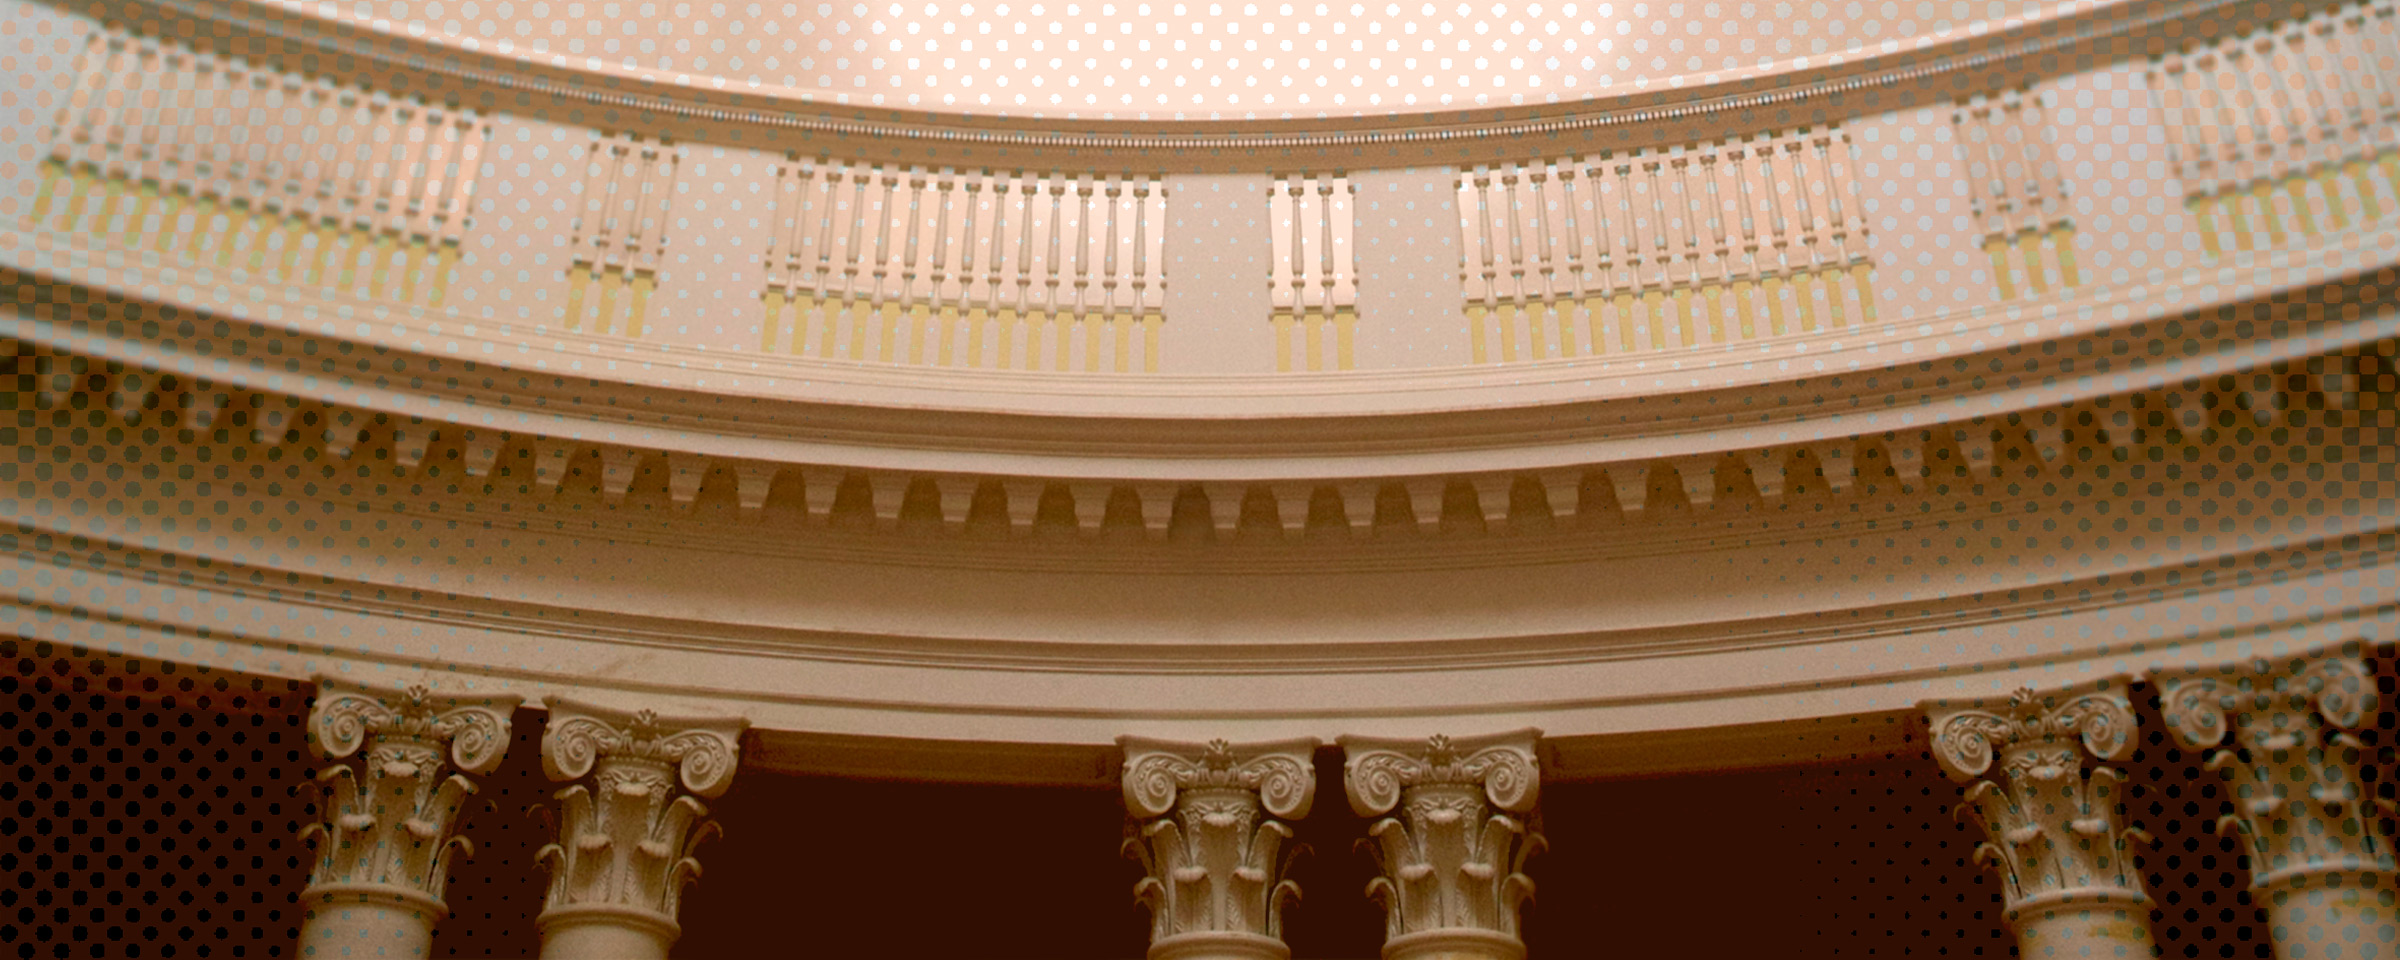 The railing on the Balcony in the Rotunda's Dome Room